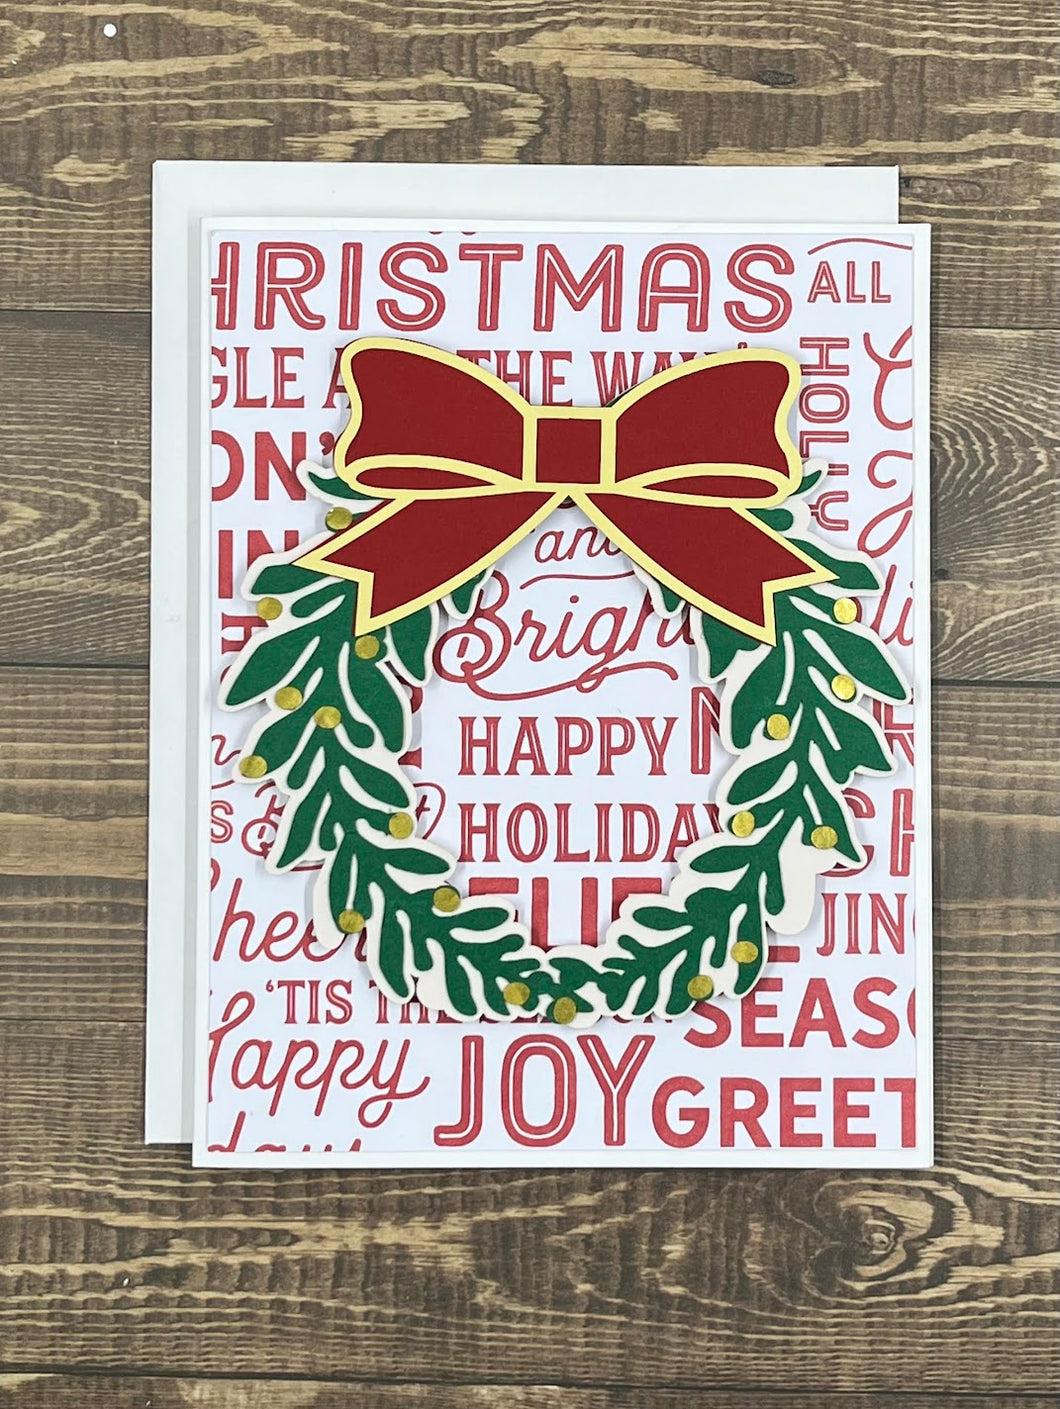 Christmas Wreath Greeting Card